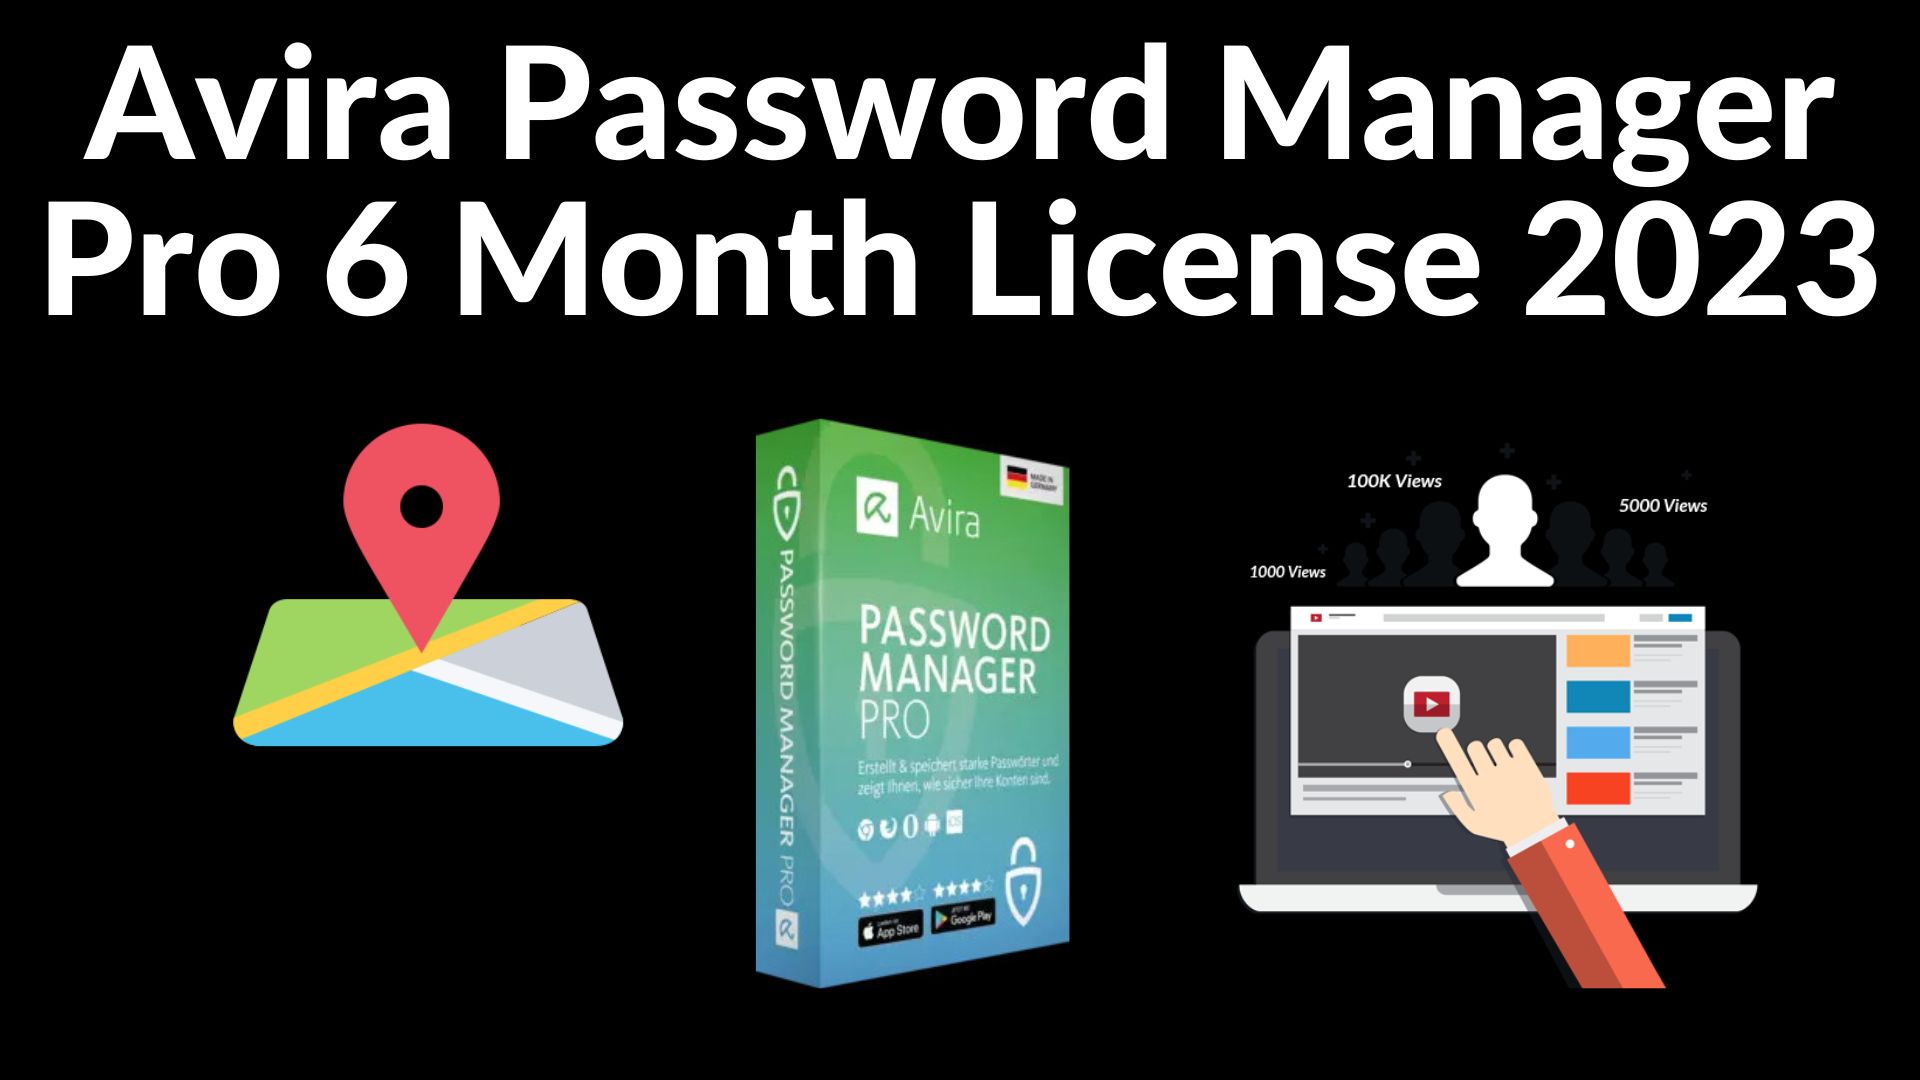 Avira password manager pro 6 month license 2023